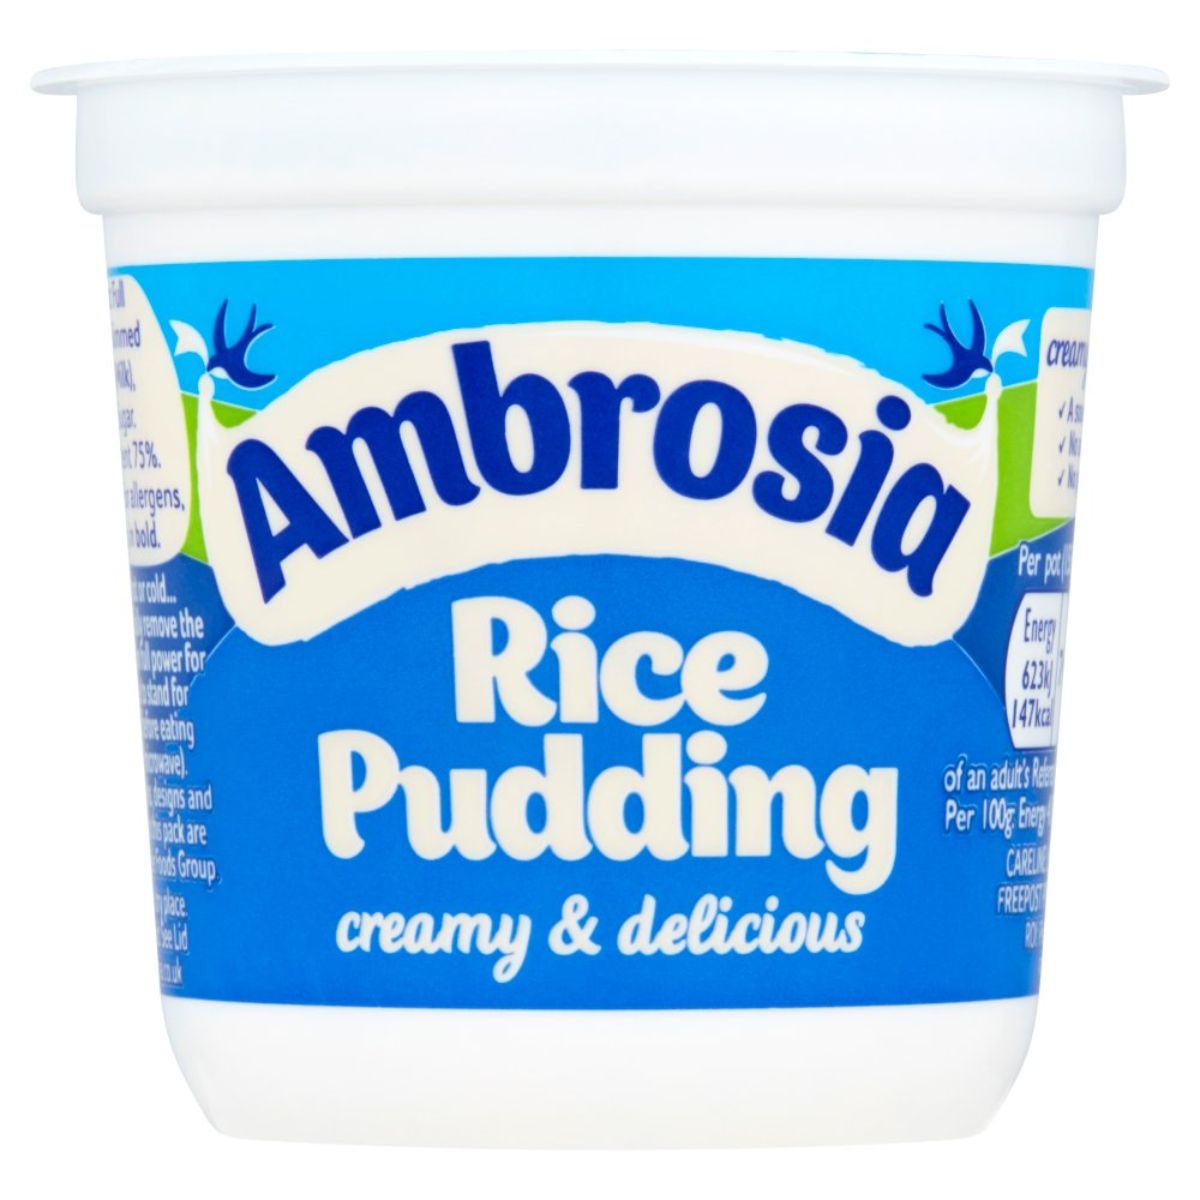 Container of Ambrosia - Rice Pudding Creamy & Delicious - 150g.